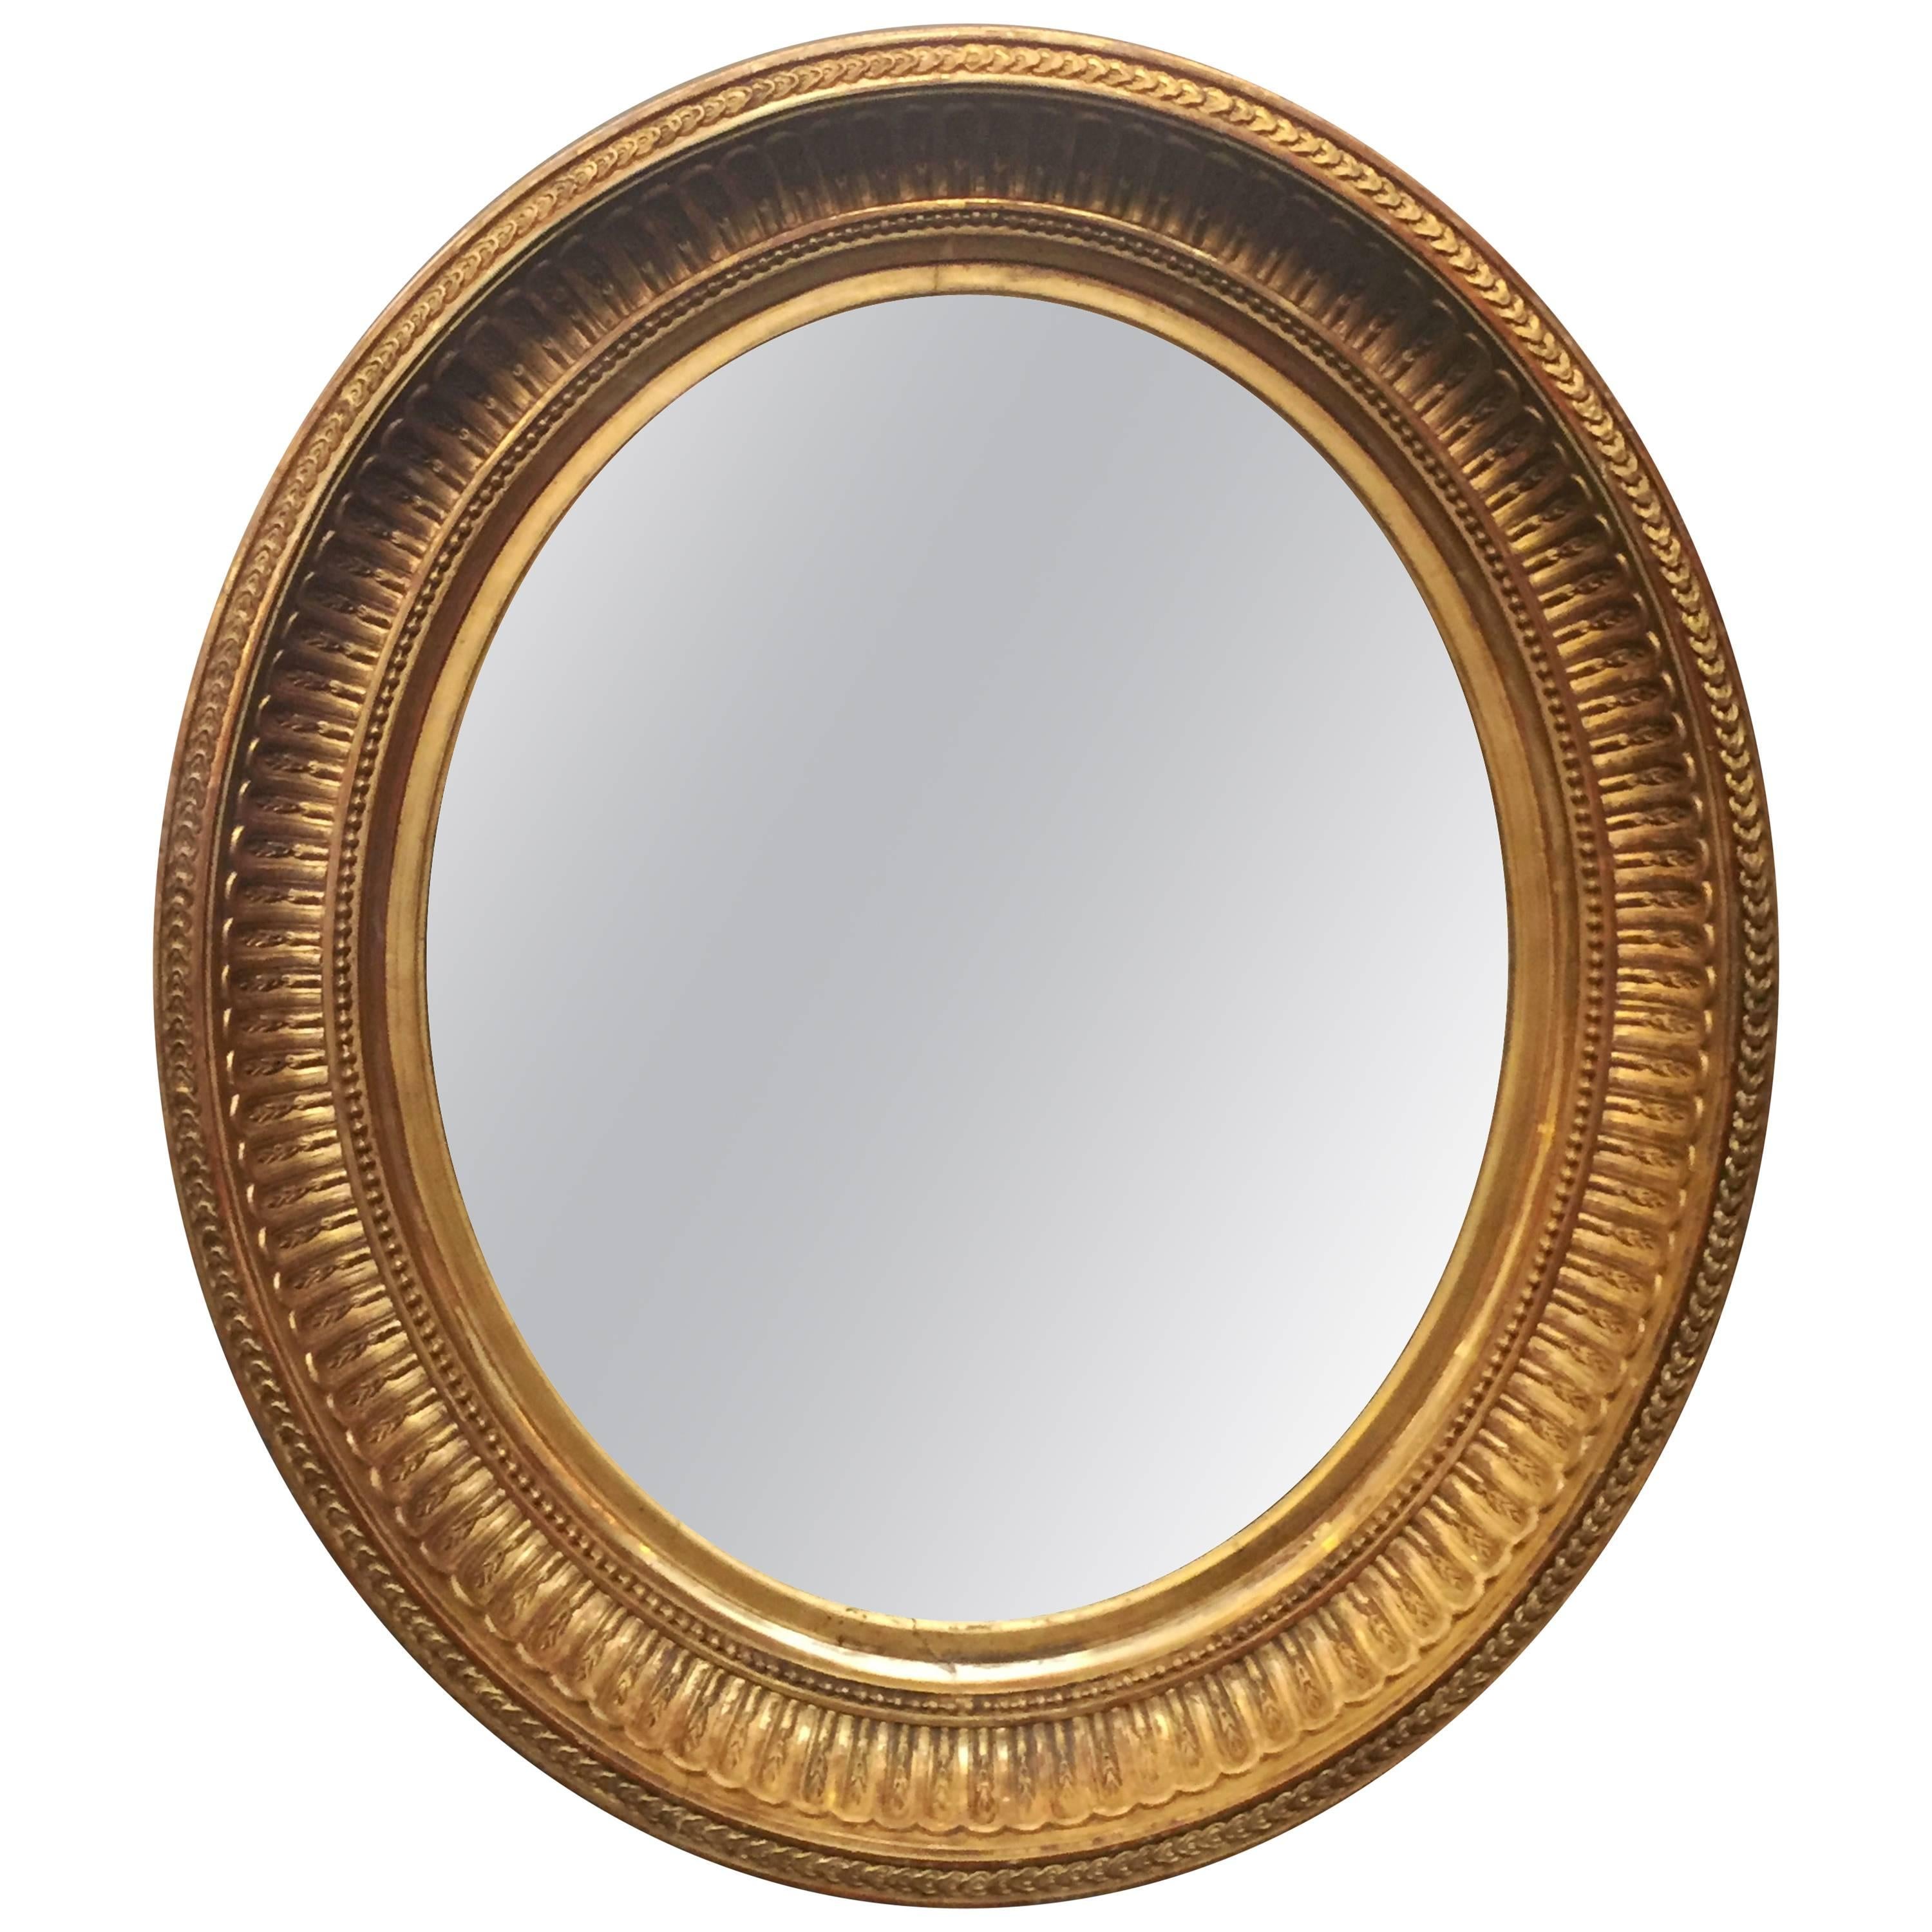 English Oval Gilt Frame Mirror (23 3/4" x 20 1/2")